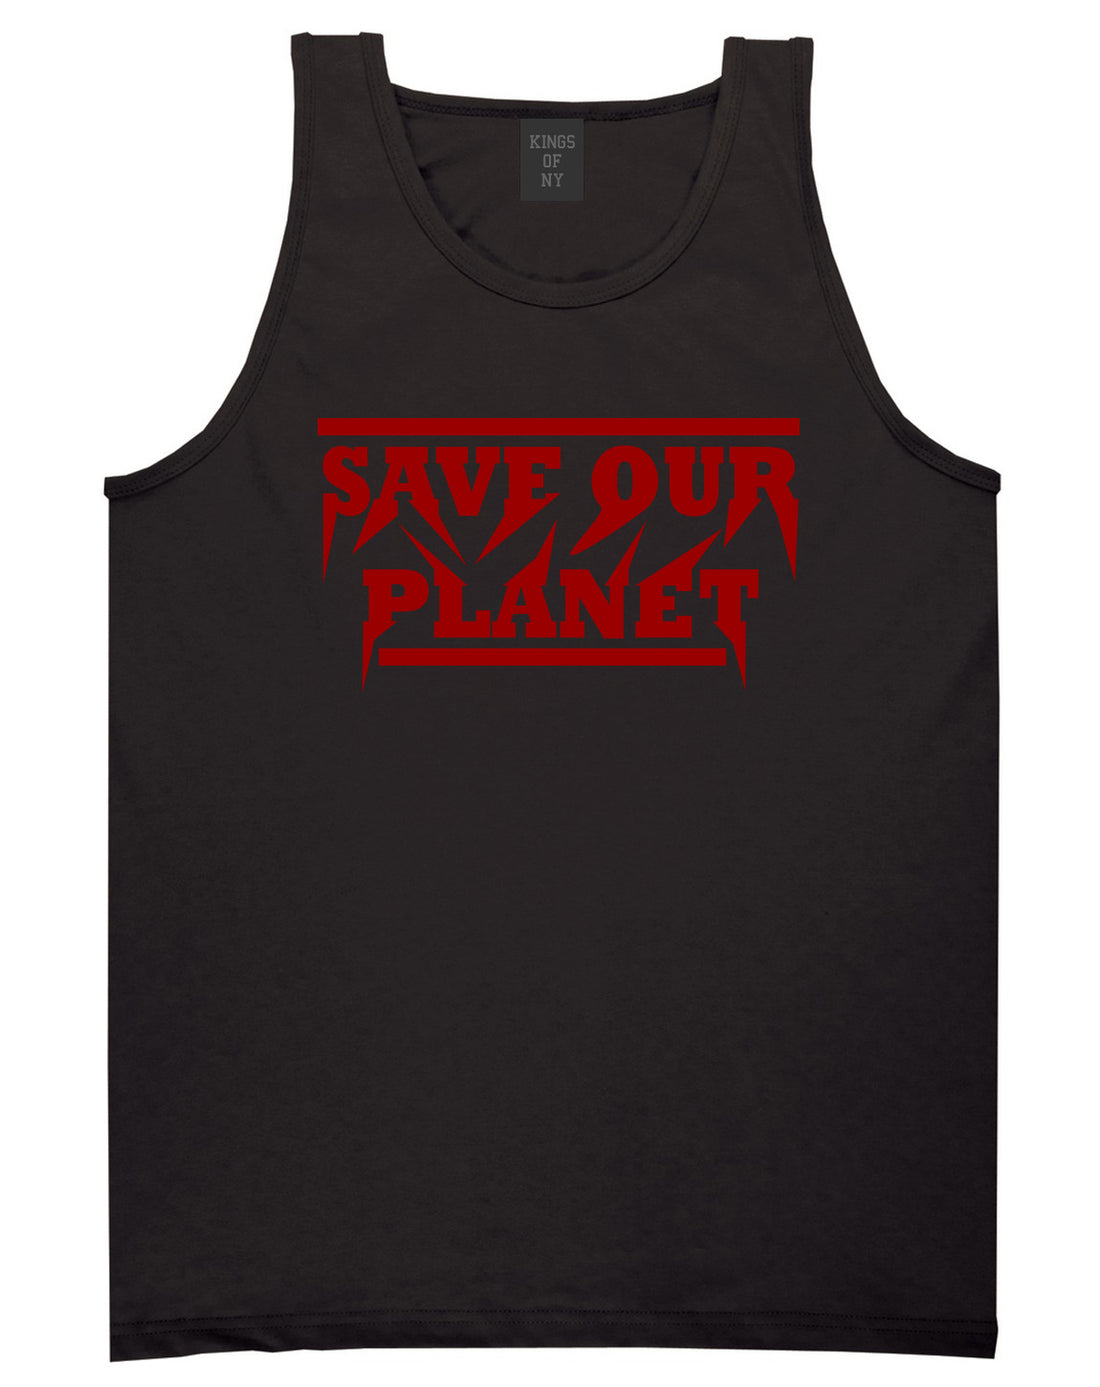 Save Our Planet Mens Tank Top Shirt Black